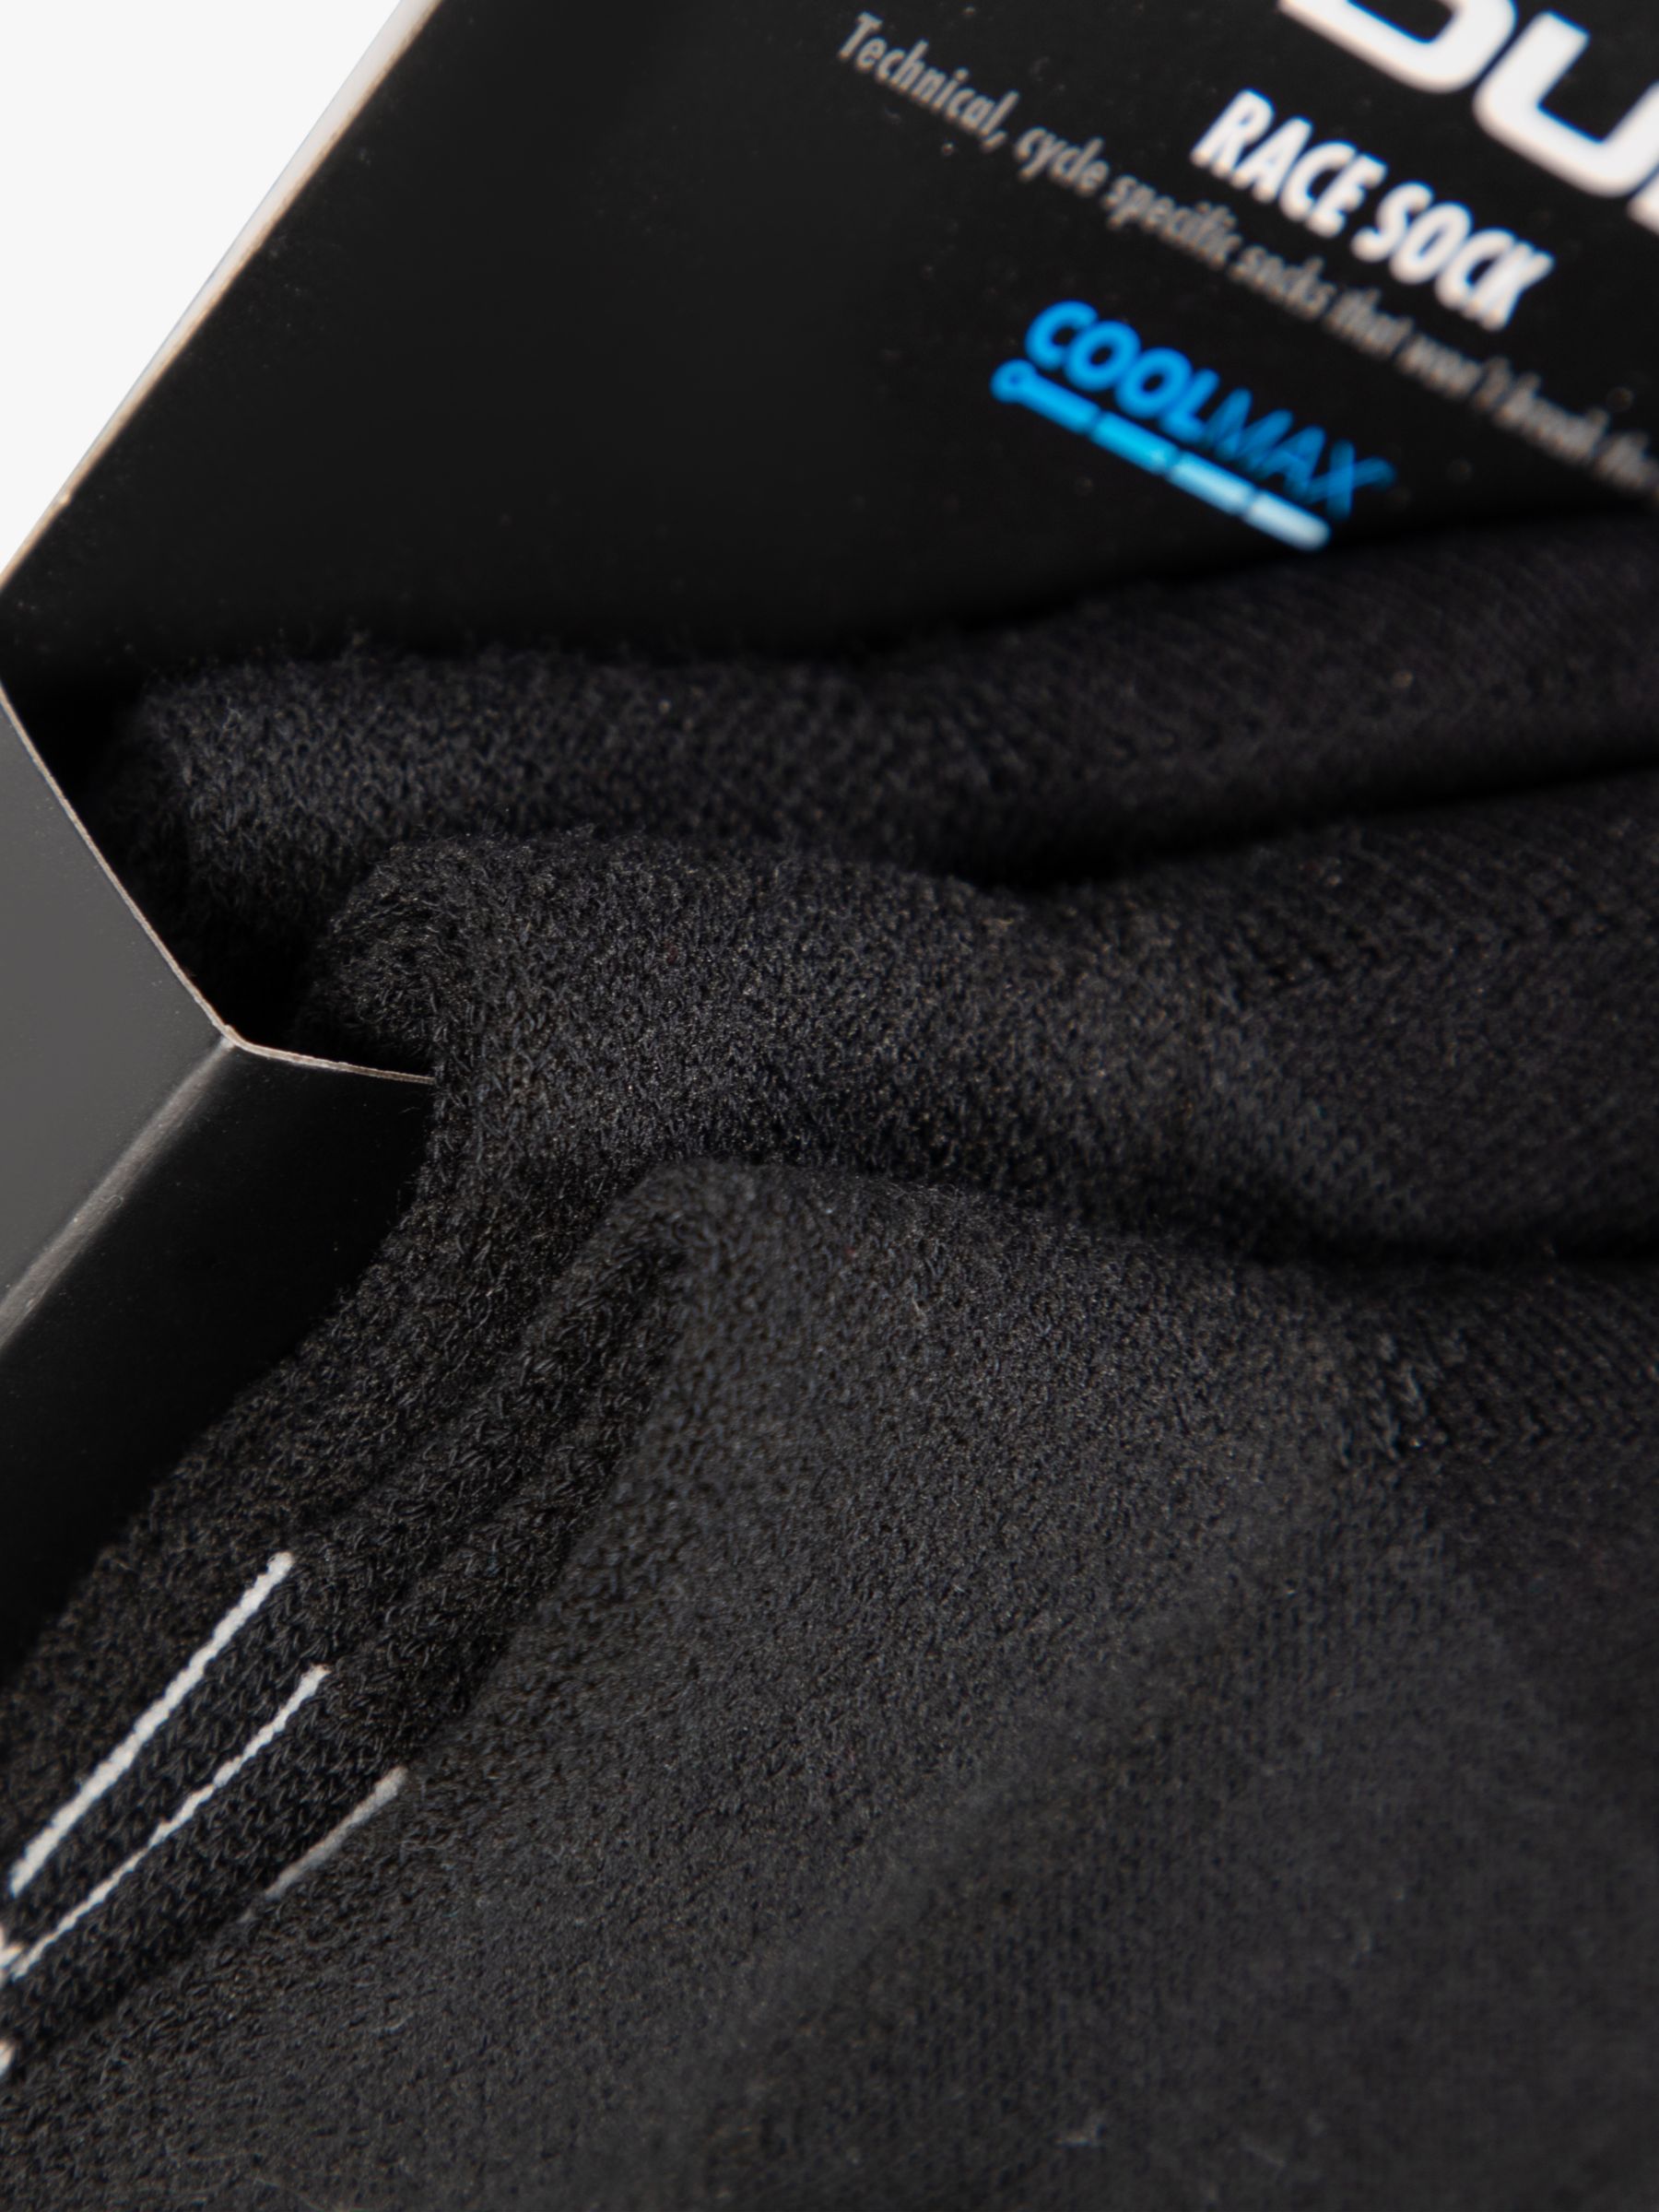 Endura Men's Coolmax Race Socks, Black, S/M